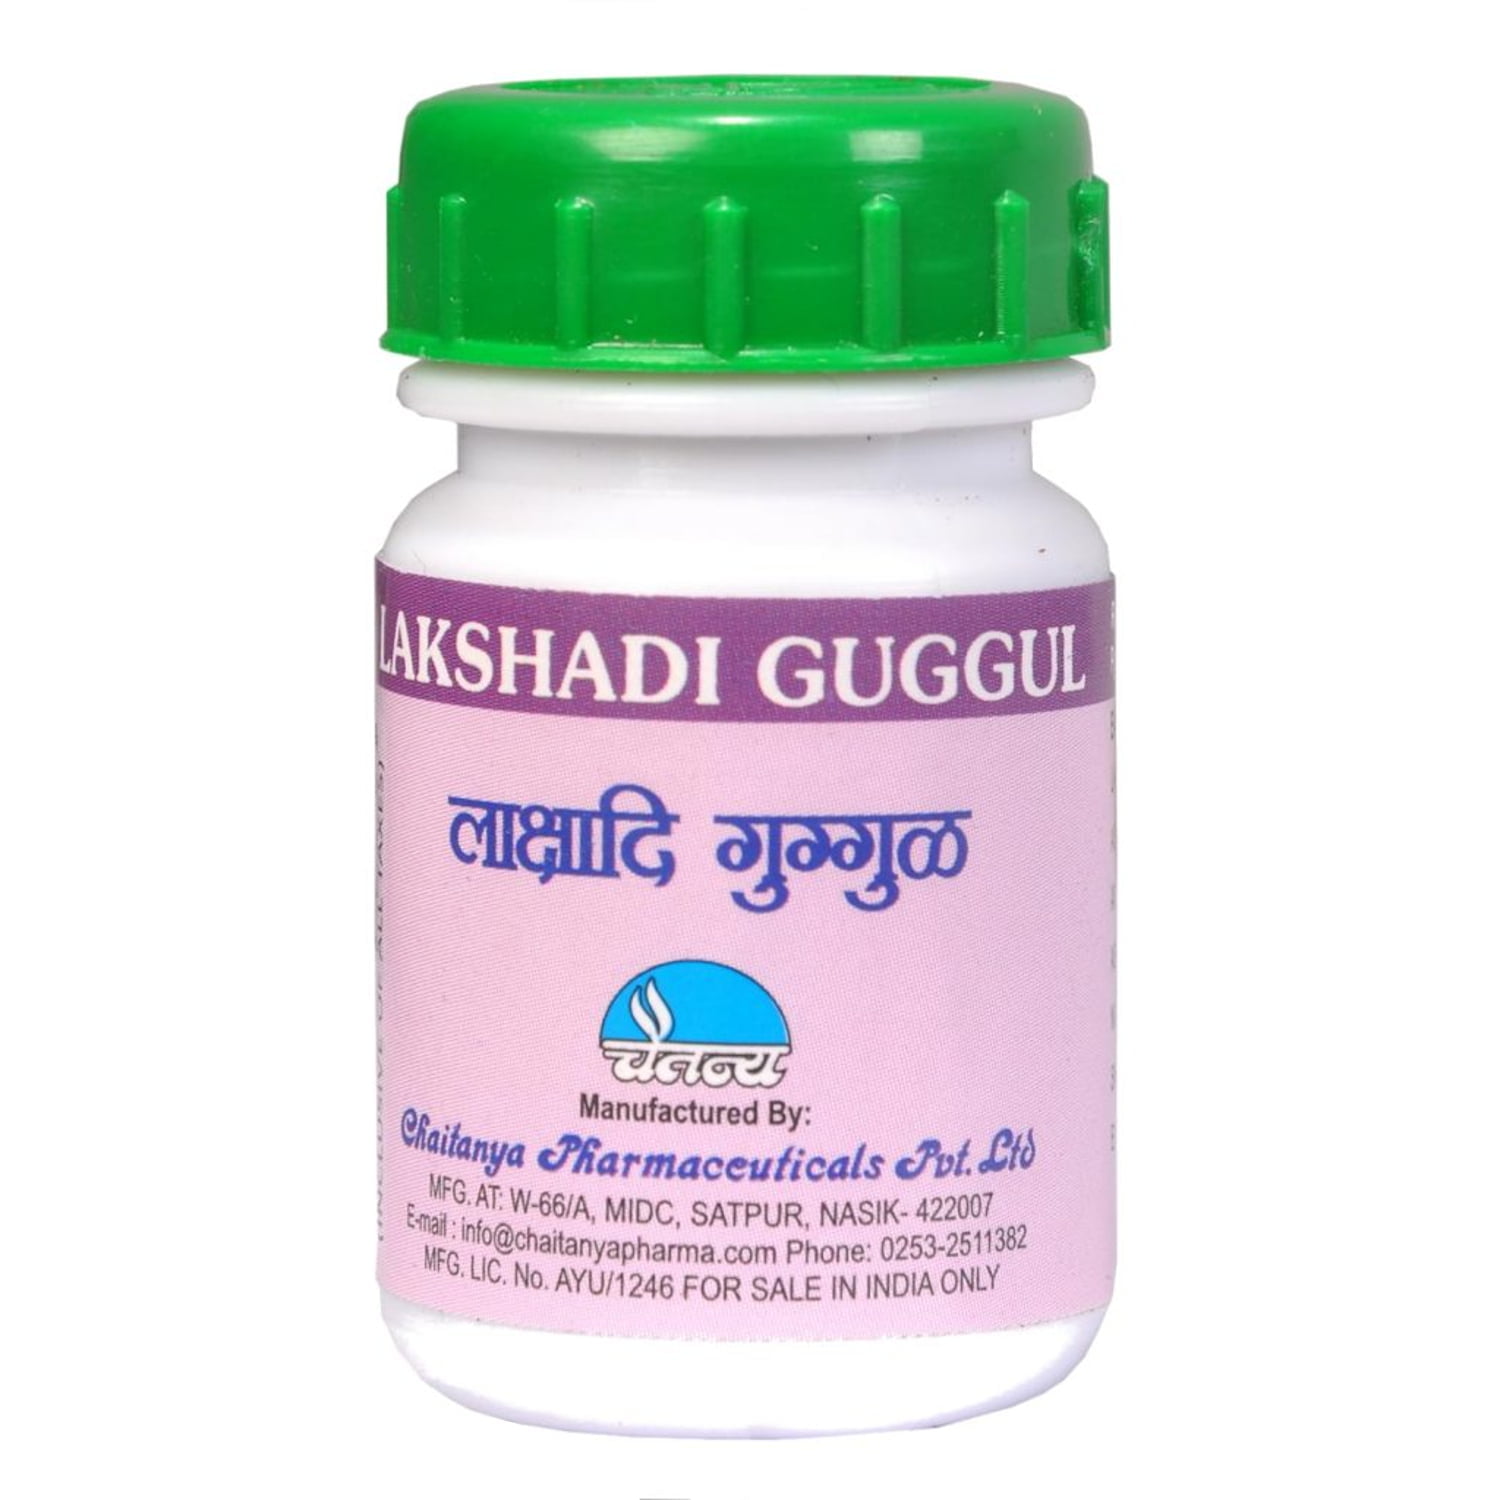 lakshadi guggul 1000 tab upto 20%off free shipping chaitanya pharmaceuticals